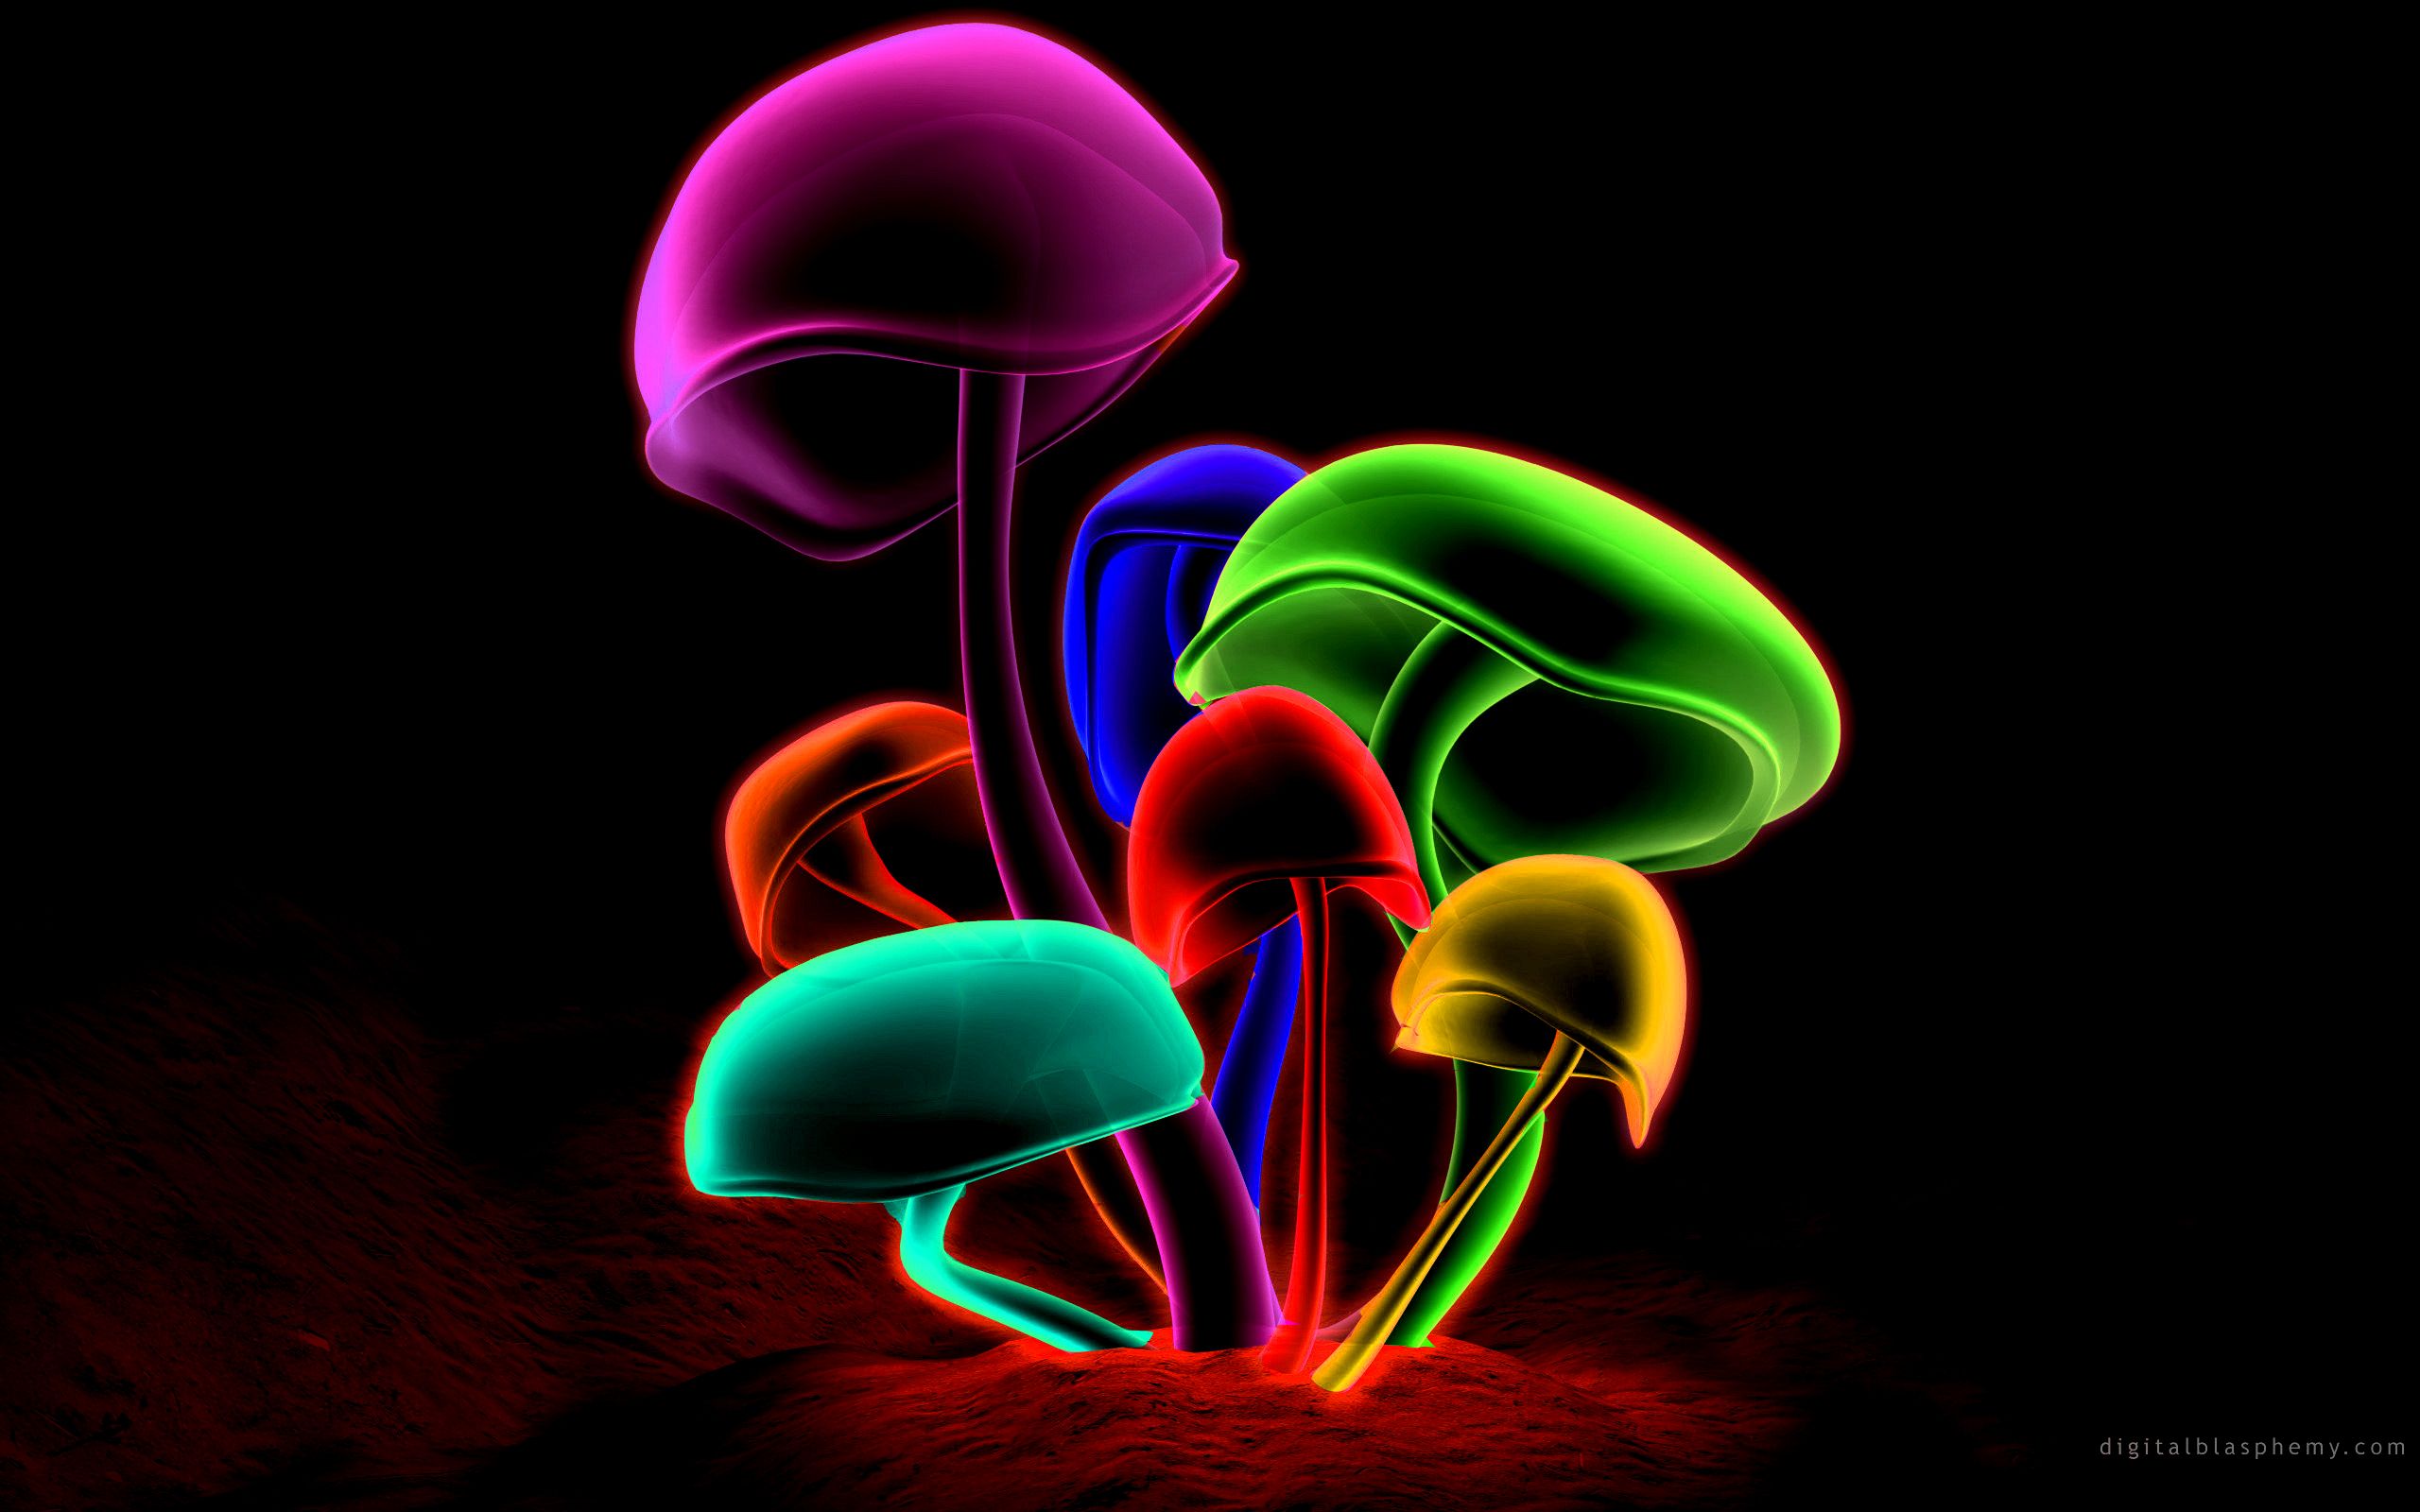 Free download Mushroom Wallpaper and Background Image stmednet [2560x1600] for your Desktop, Mobile & Tablet. Explore Mushrooms Wallpaper. Mushrooms Wallpaper, Mushrooms Wallpaper, Mario Mushrooms Wallpaper